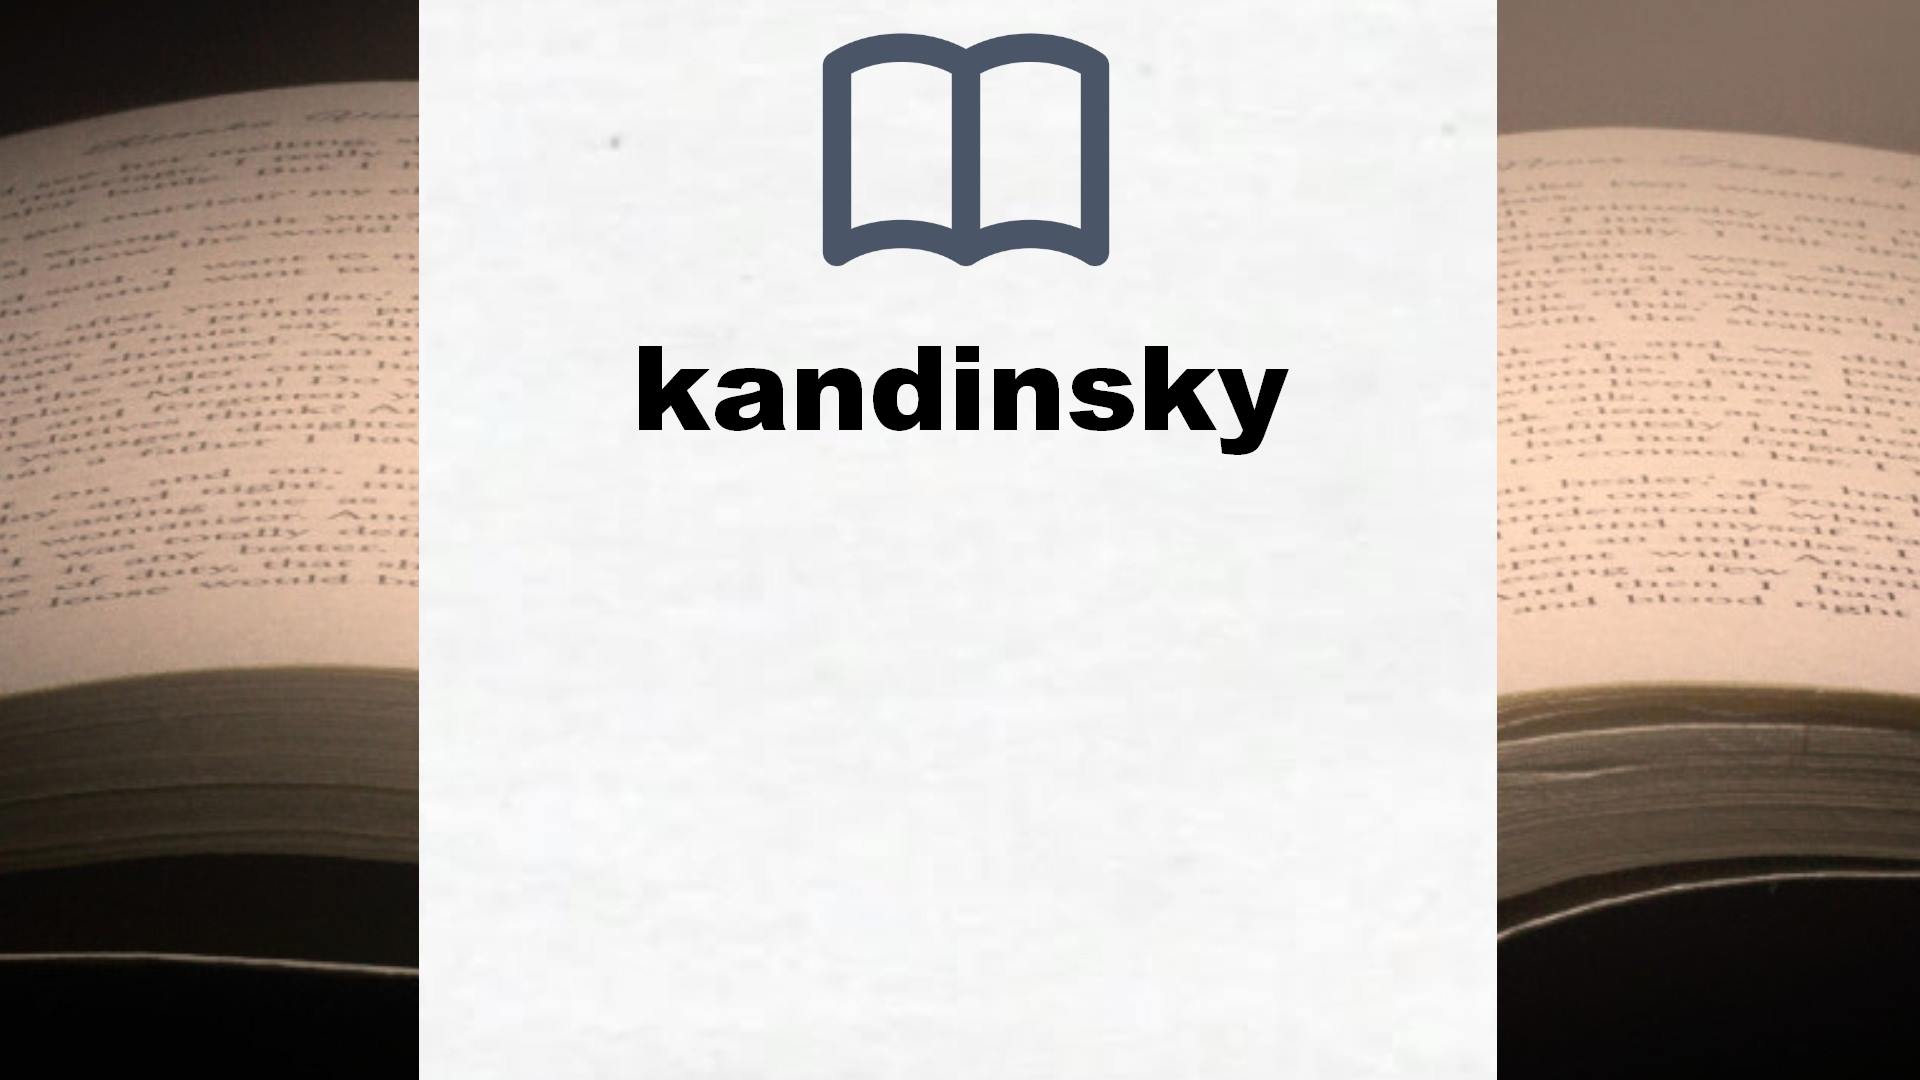 Libros sobre kandinsky